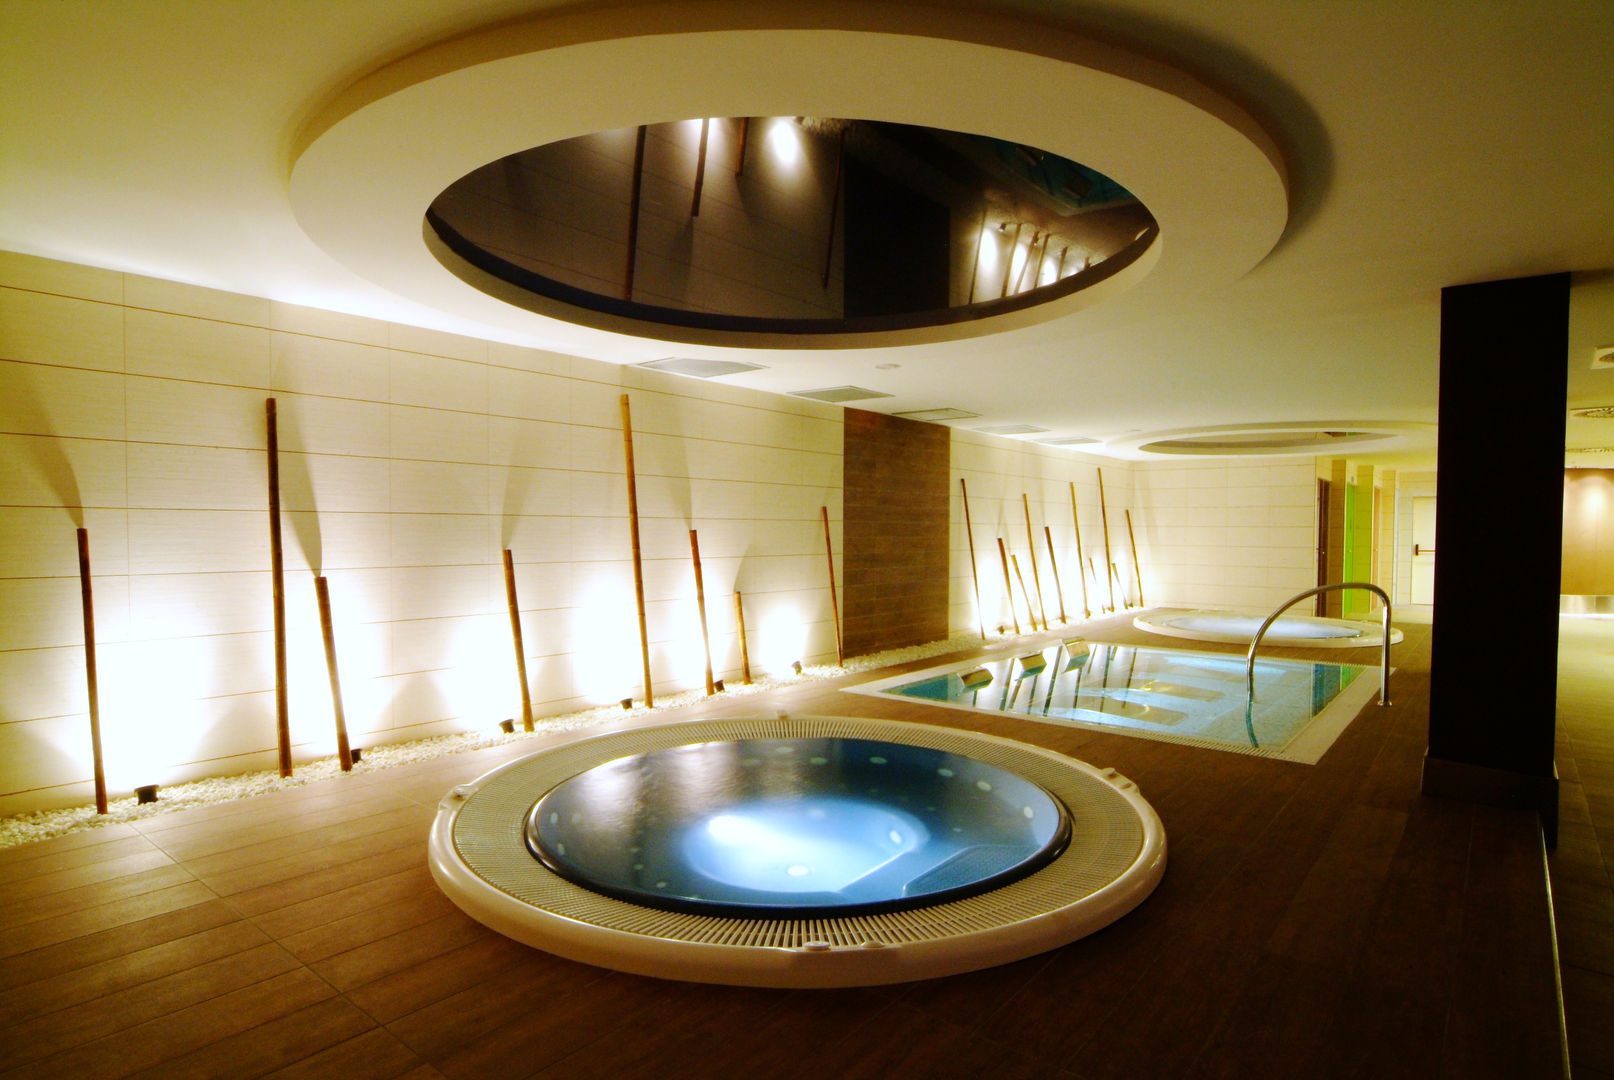 Spa en Hotel Imperial Park, Gunitec Concept Pools Gunitec Concept Pools Spa: ideas, imágenes y decoración